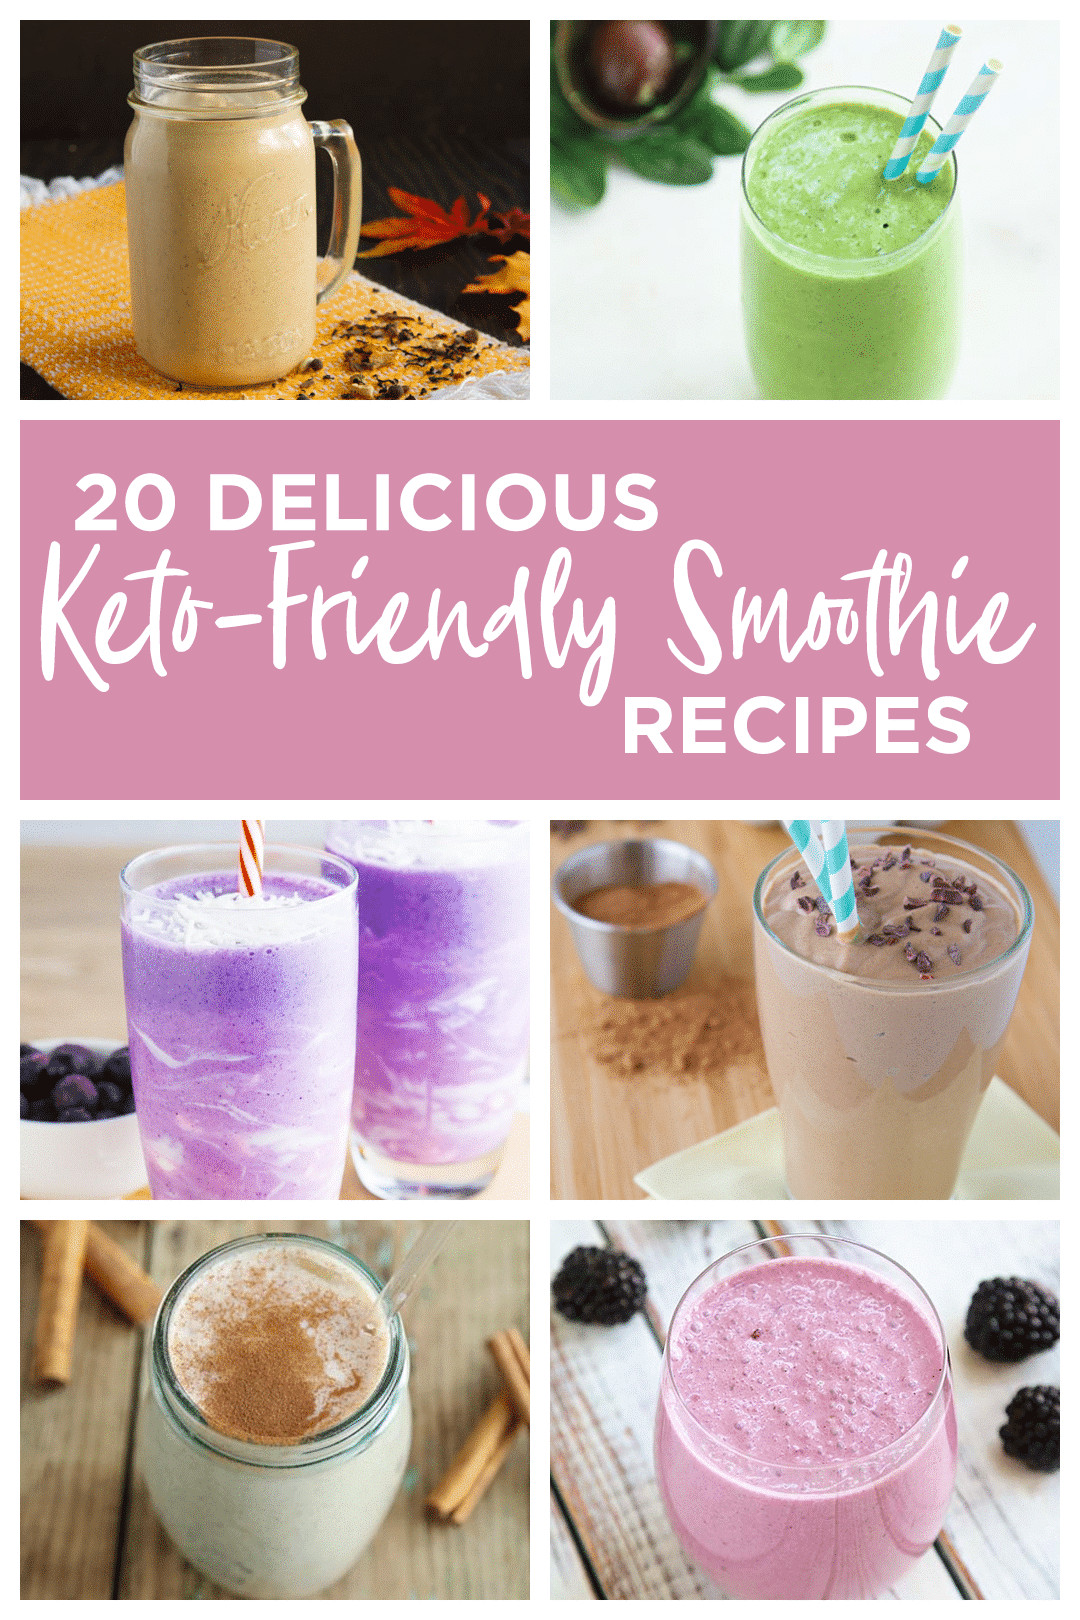 Easy Keto Smoothie Recipes
 Easy Keto Smoothie Recipes 20 Delicious Recipes